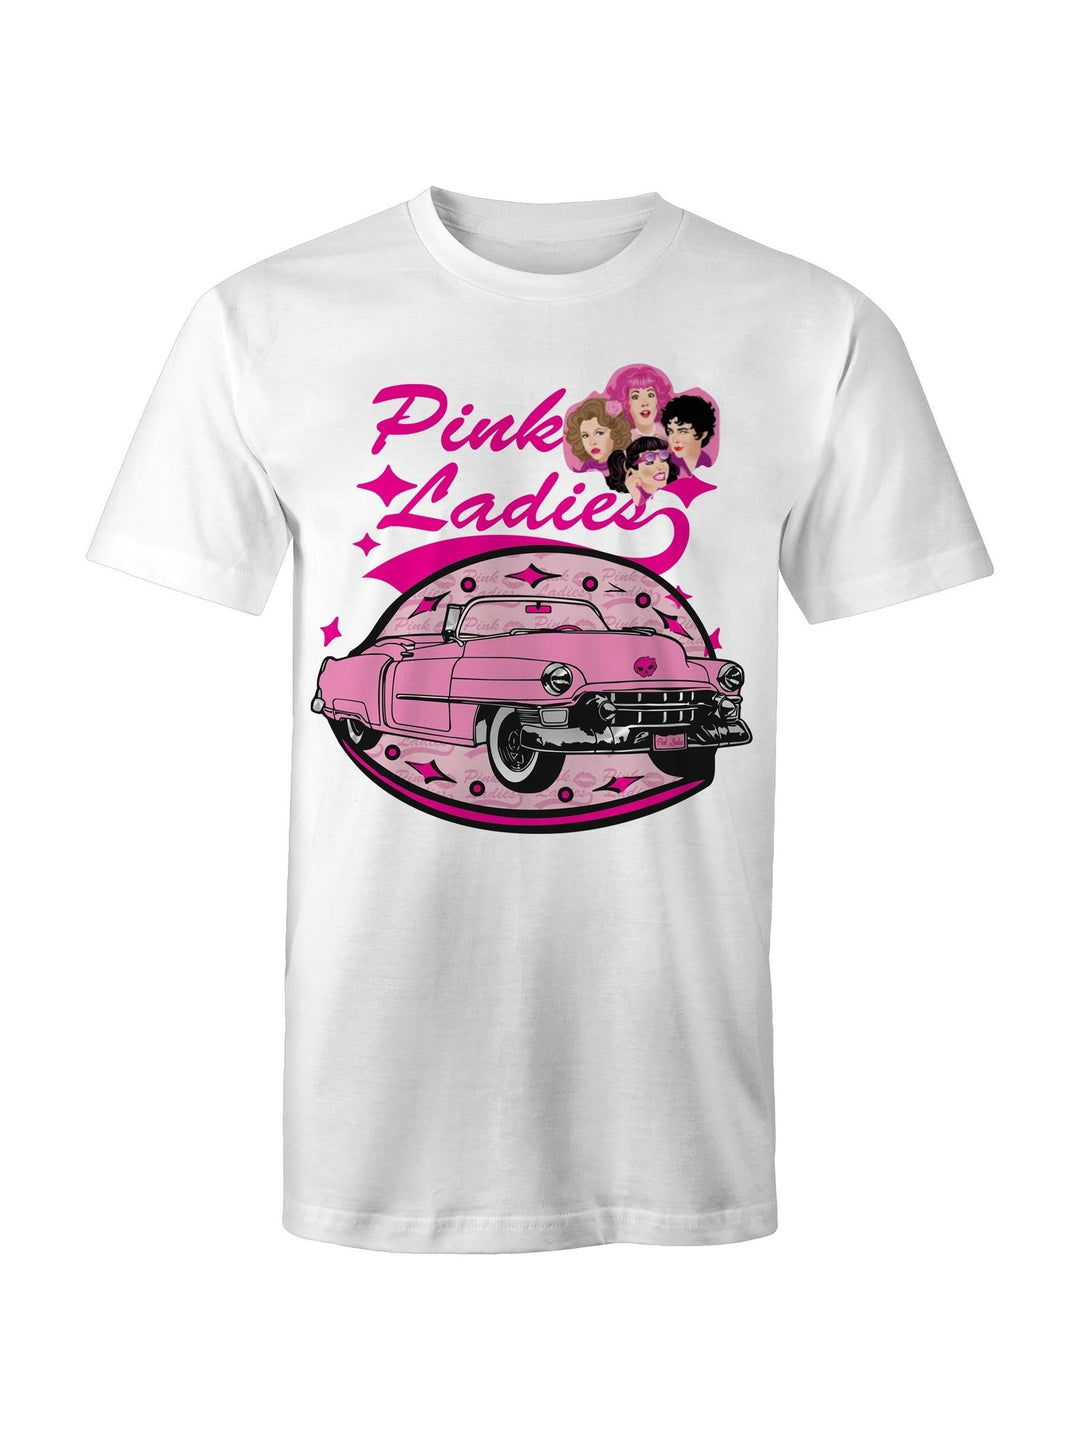 Pink Ladies - Women's Tee